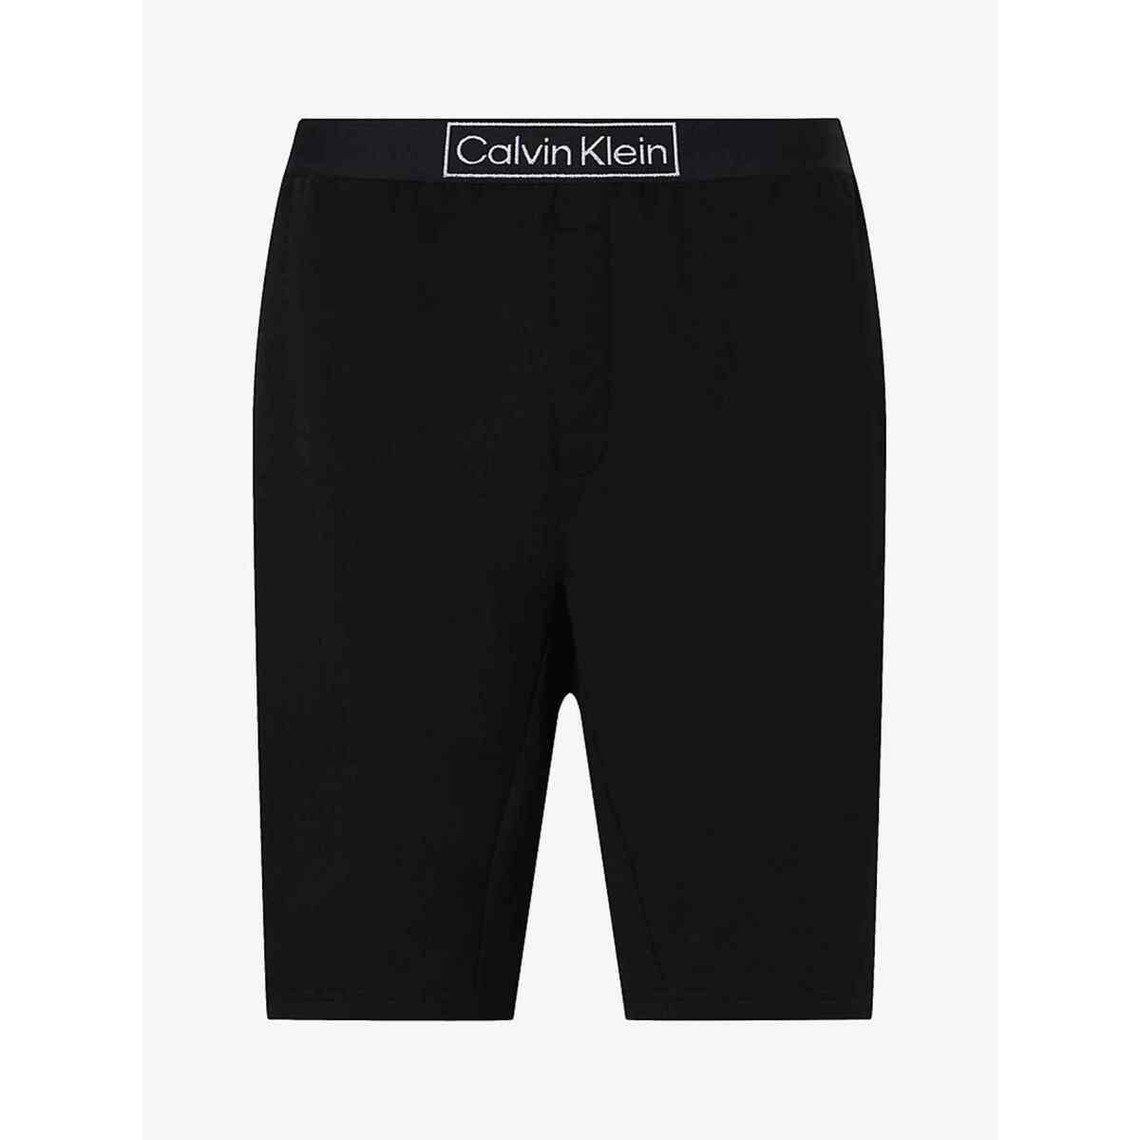 Bas de pyjama - Short Calvin Klein EUROPE Underwear Noir en coton